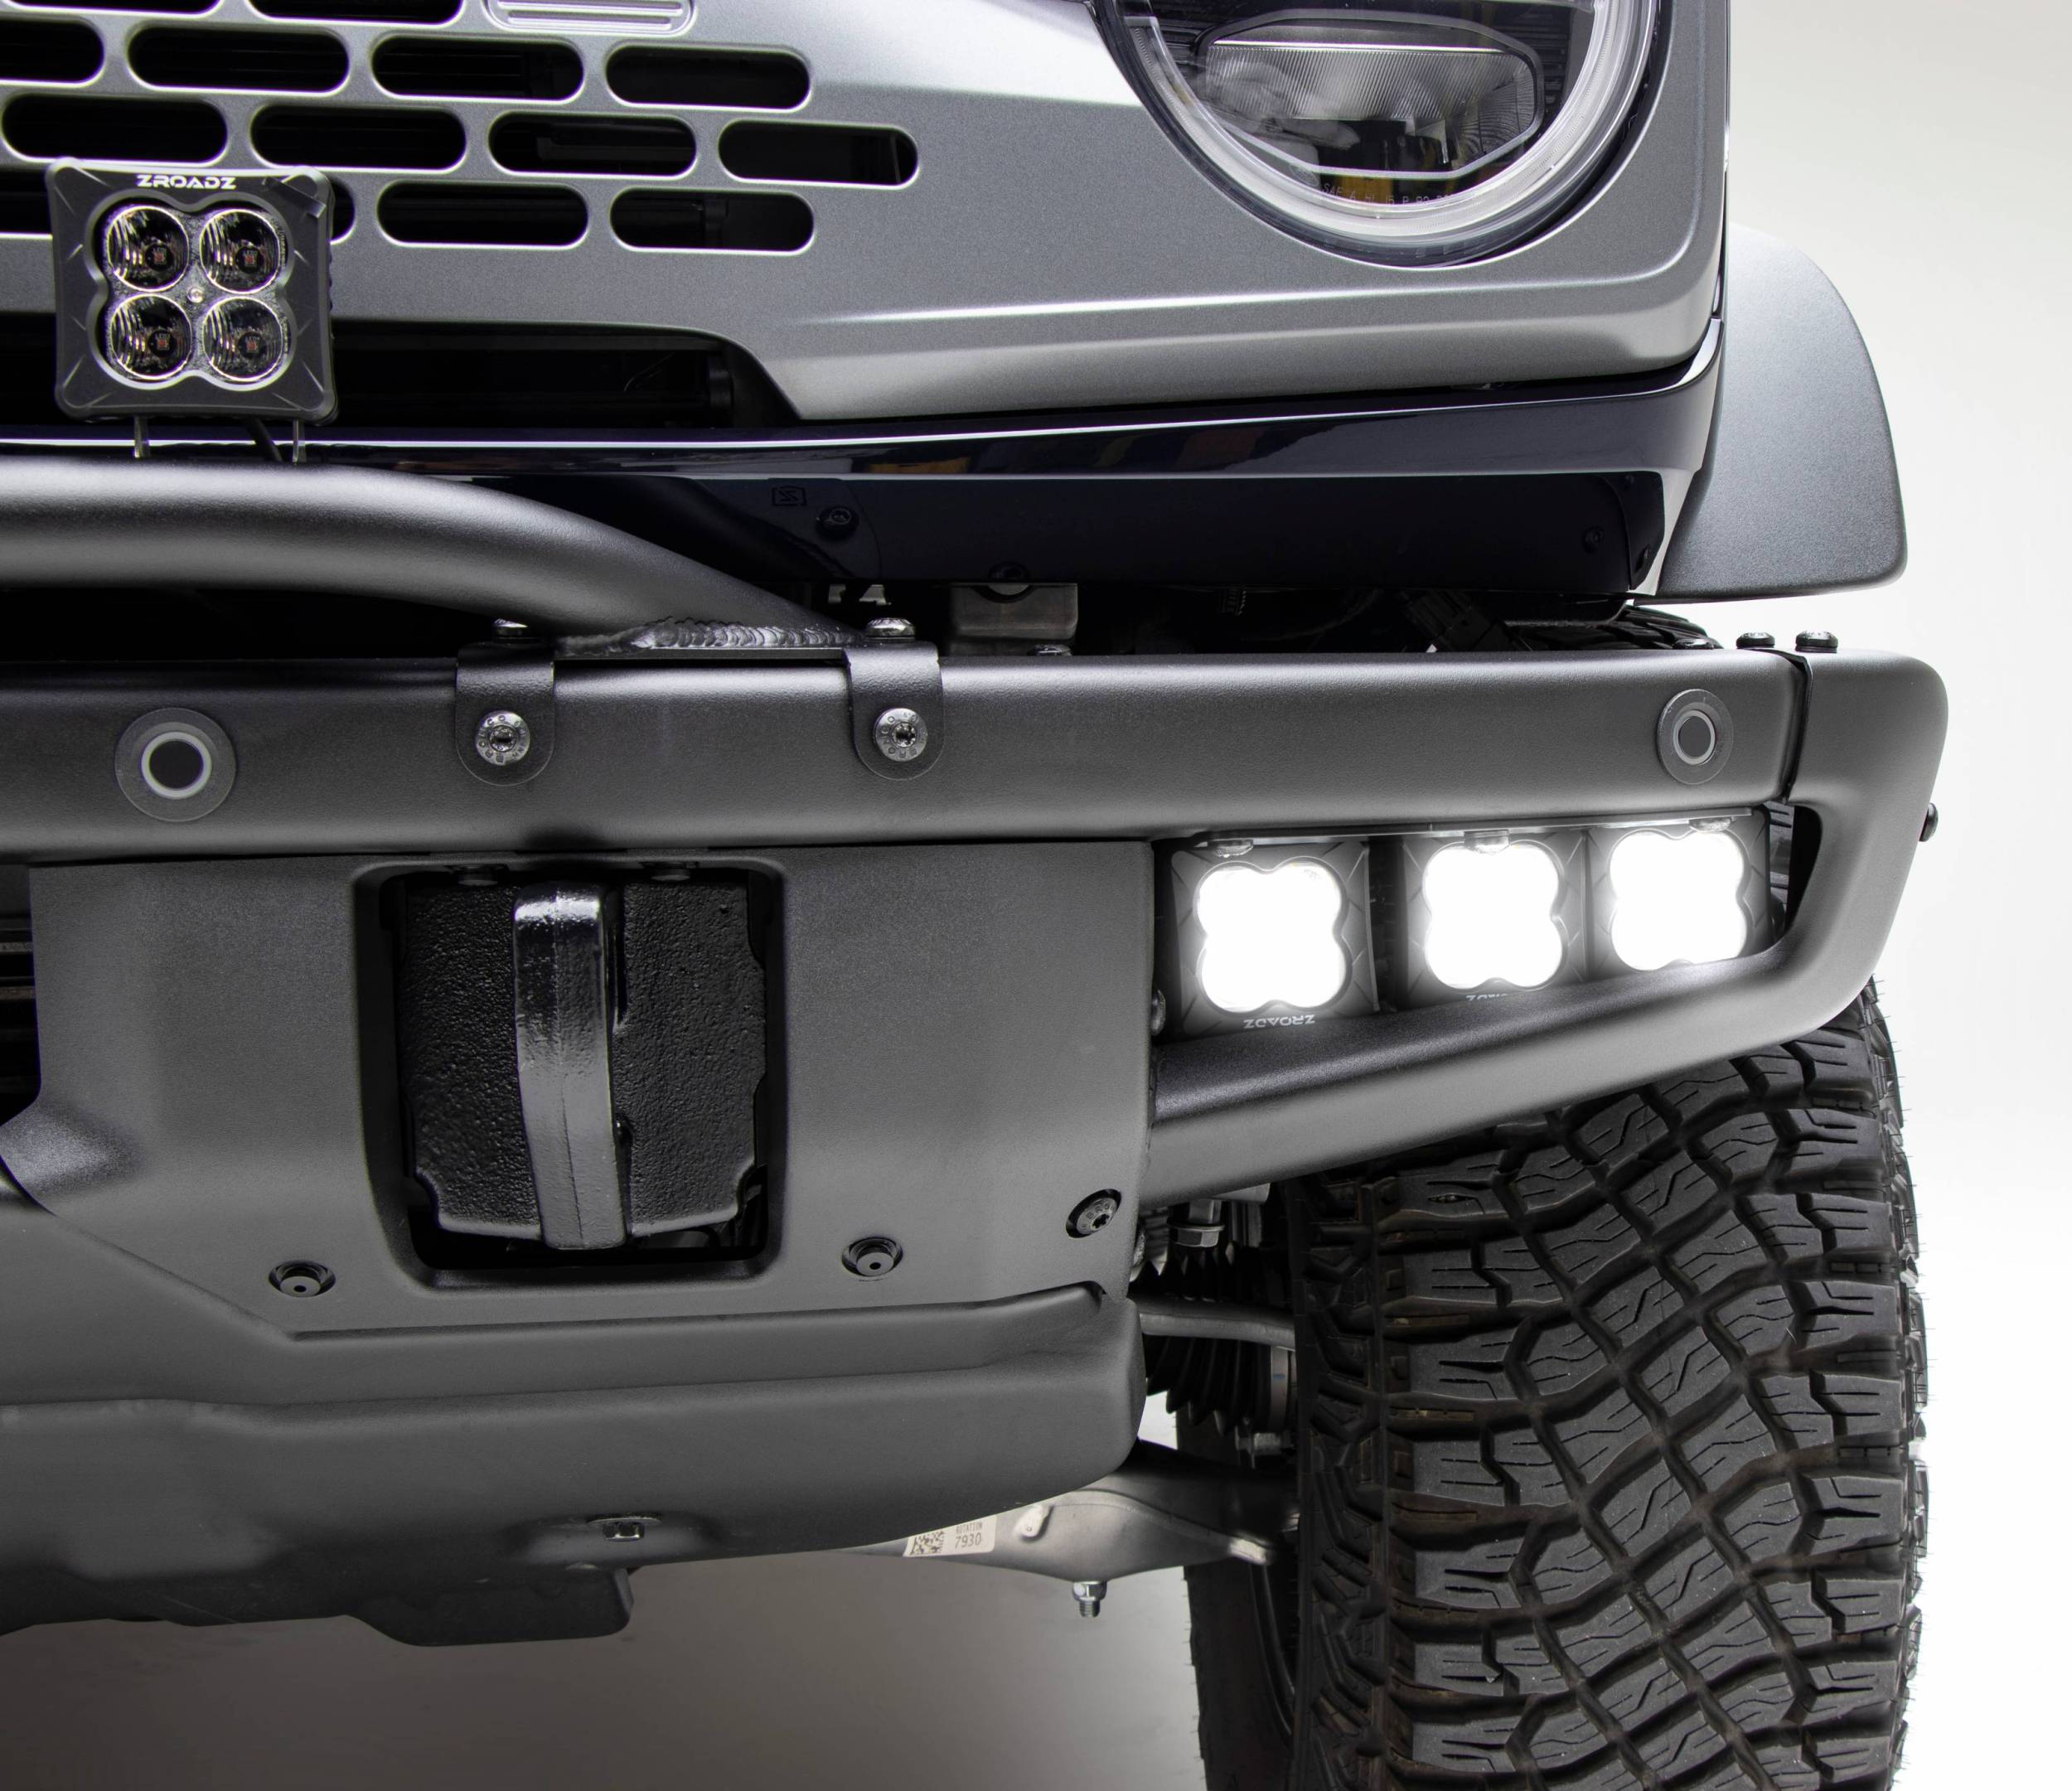 ZROADZ OFF ROAD PRODUCTS - 2021-2022 Ford Bronco Front Bumper Fog LED KIT, Includes (6) 3-Inch ZROADZ White LED Pod Lights - Part # Z325401-KIT